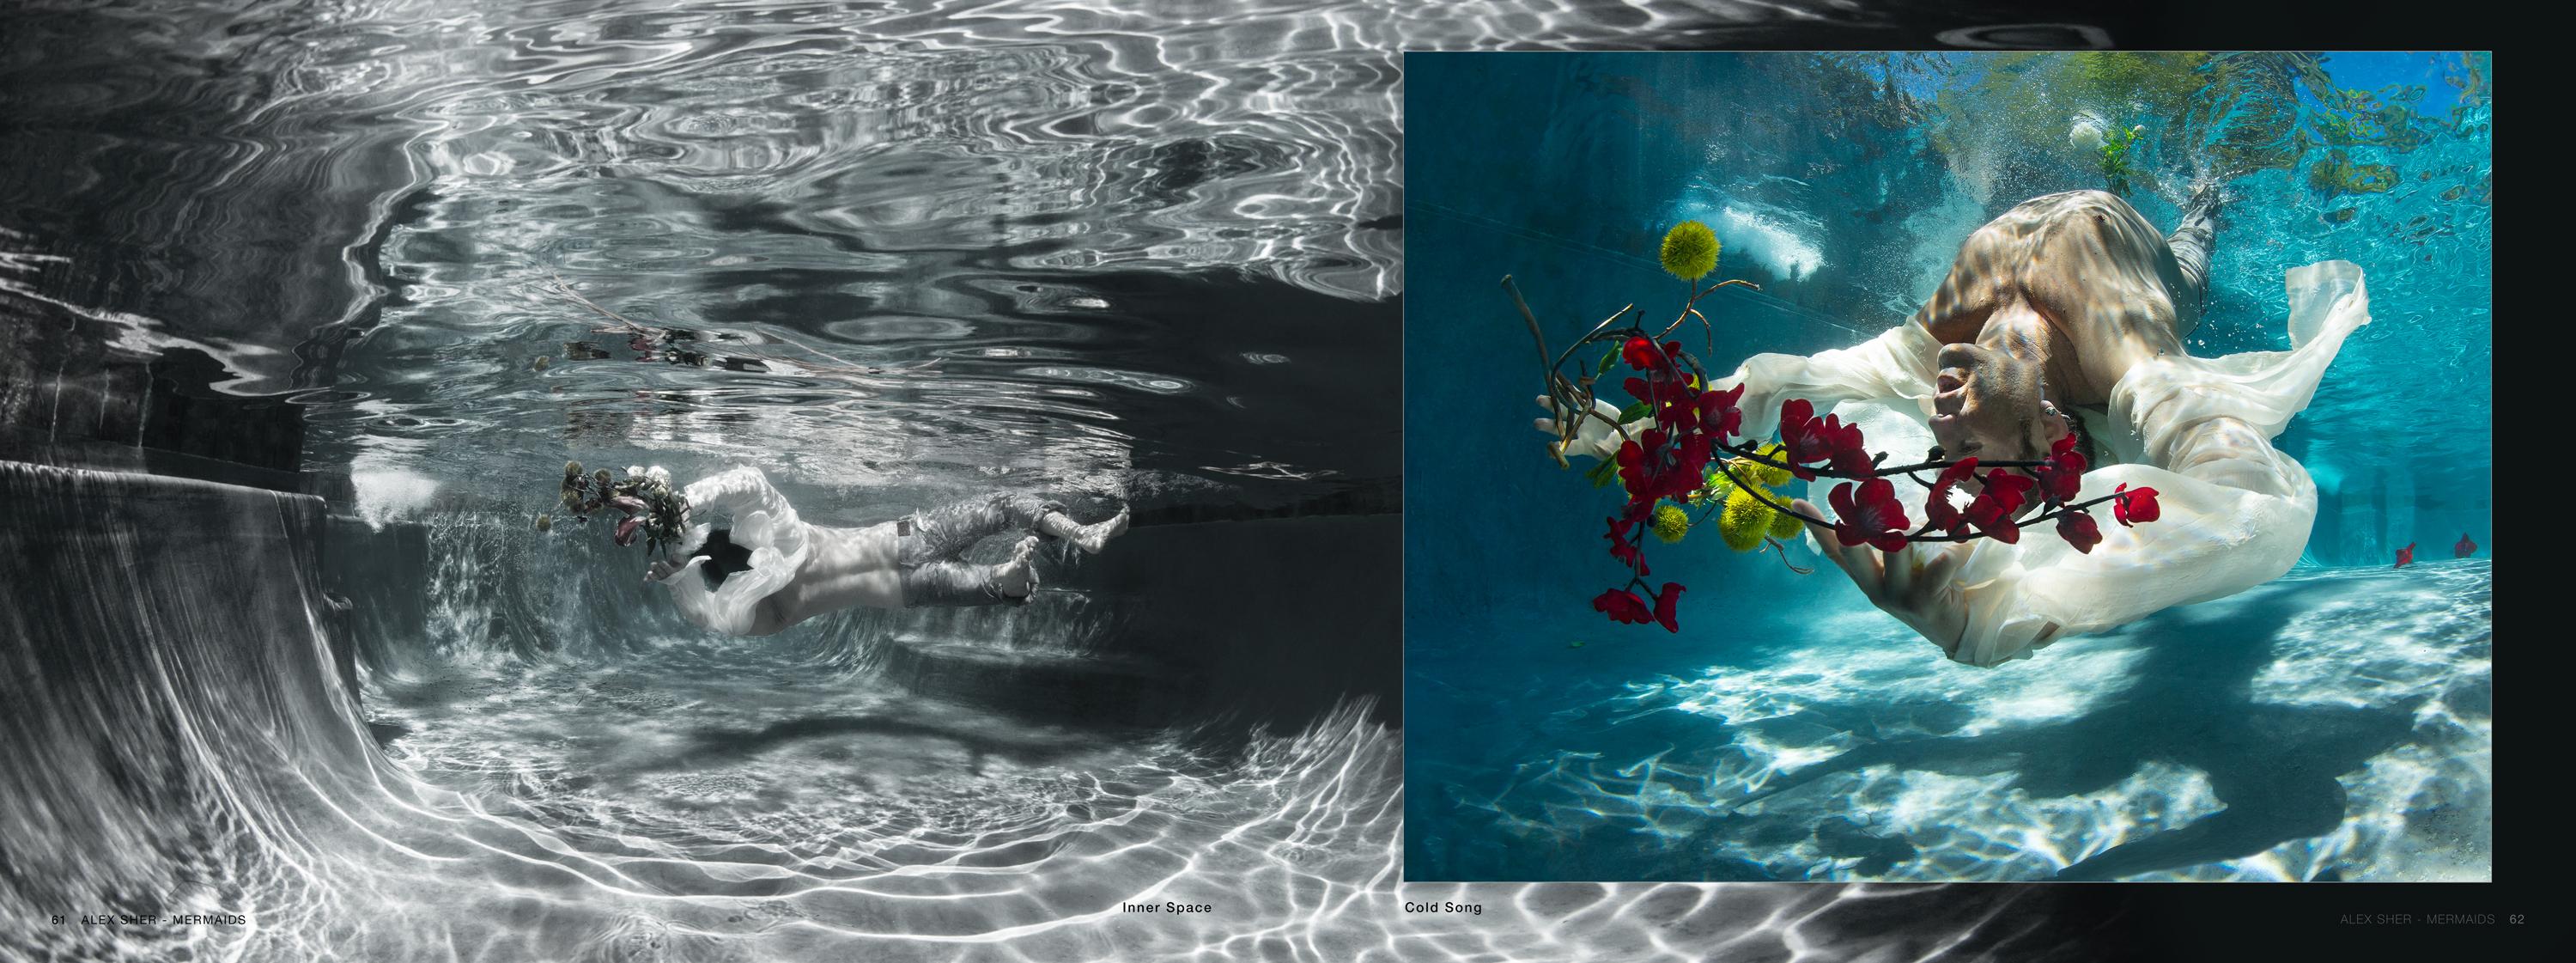 Mermaids -  a book of underwater nude and ocean wildlife photographs 12